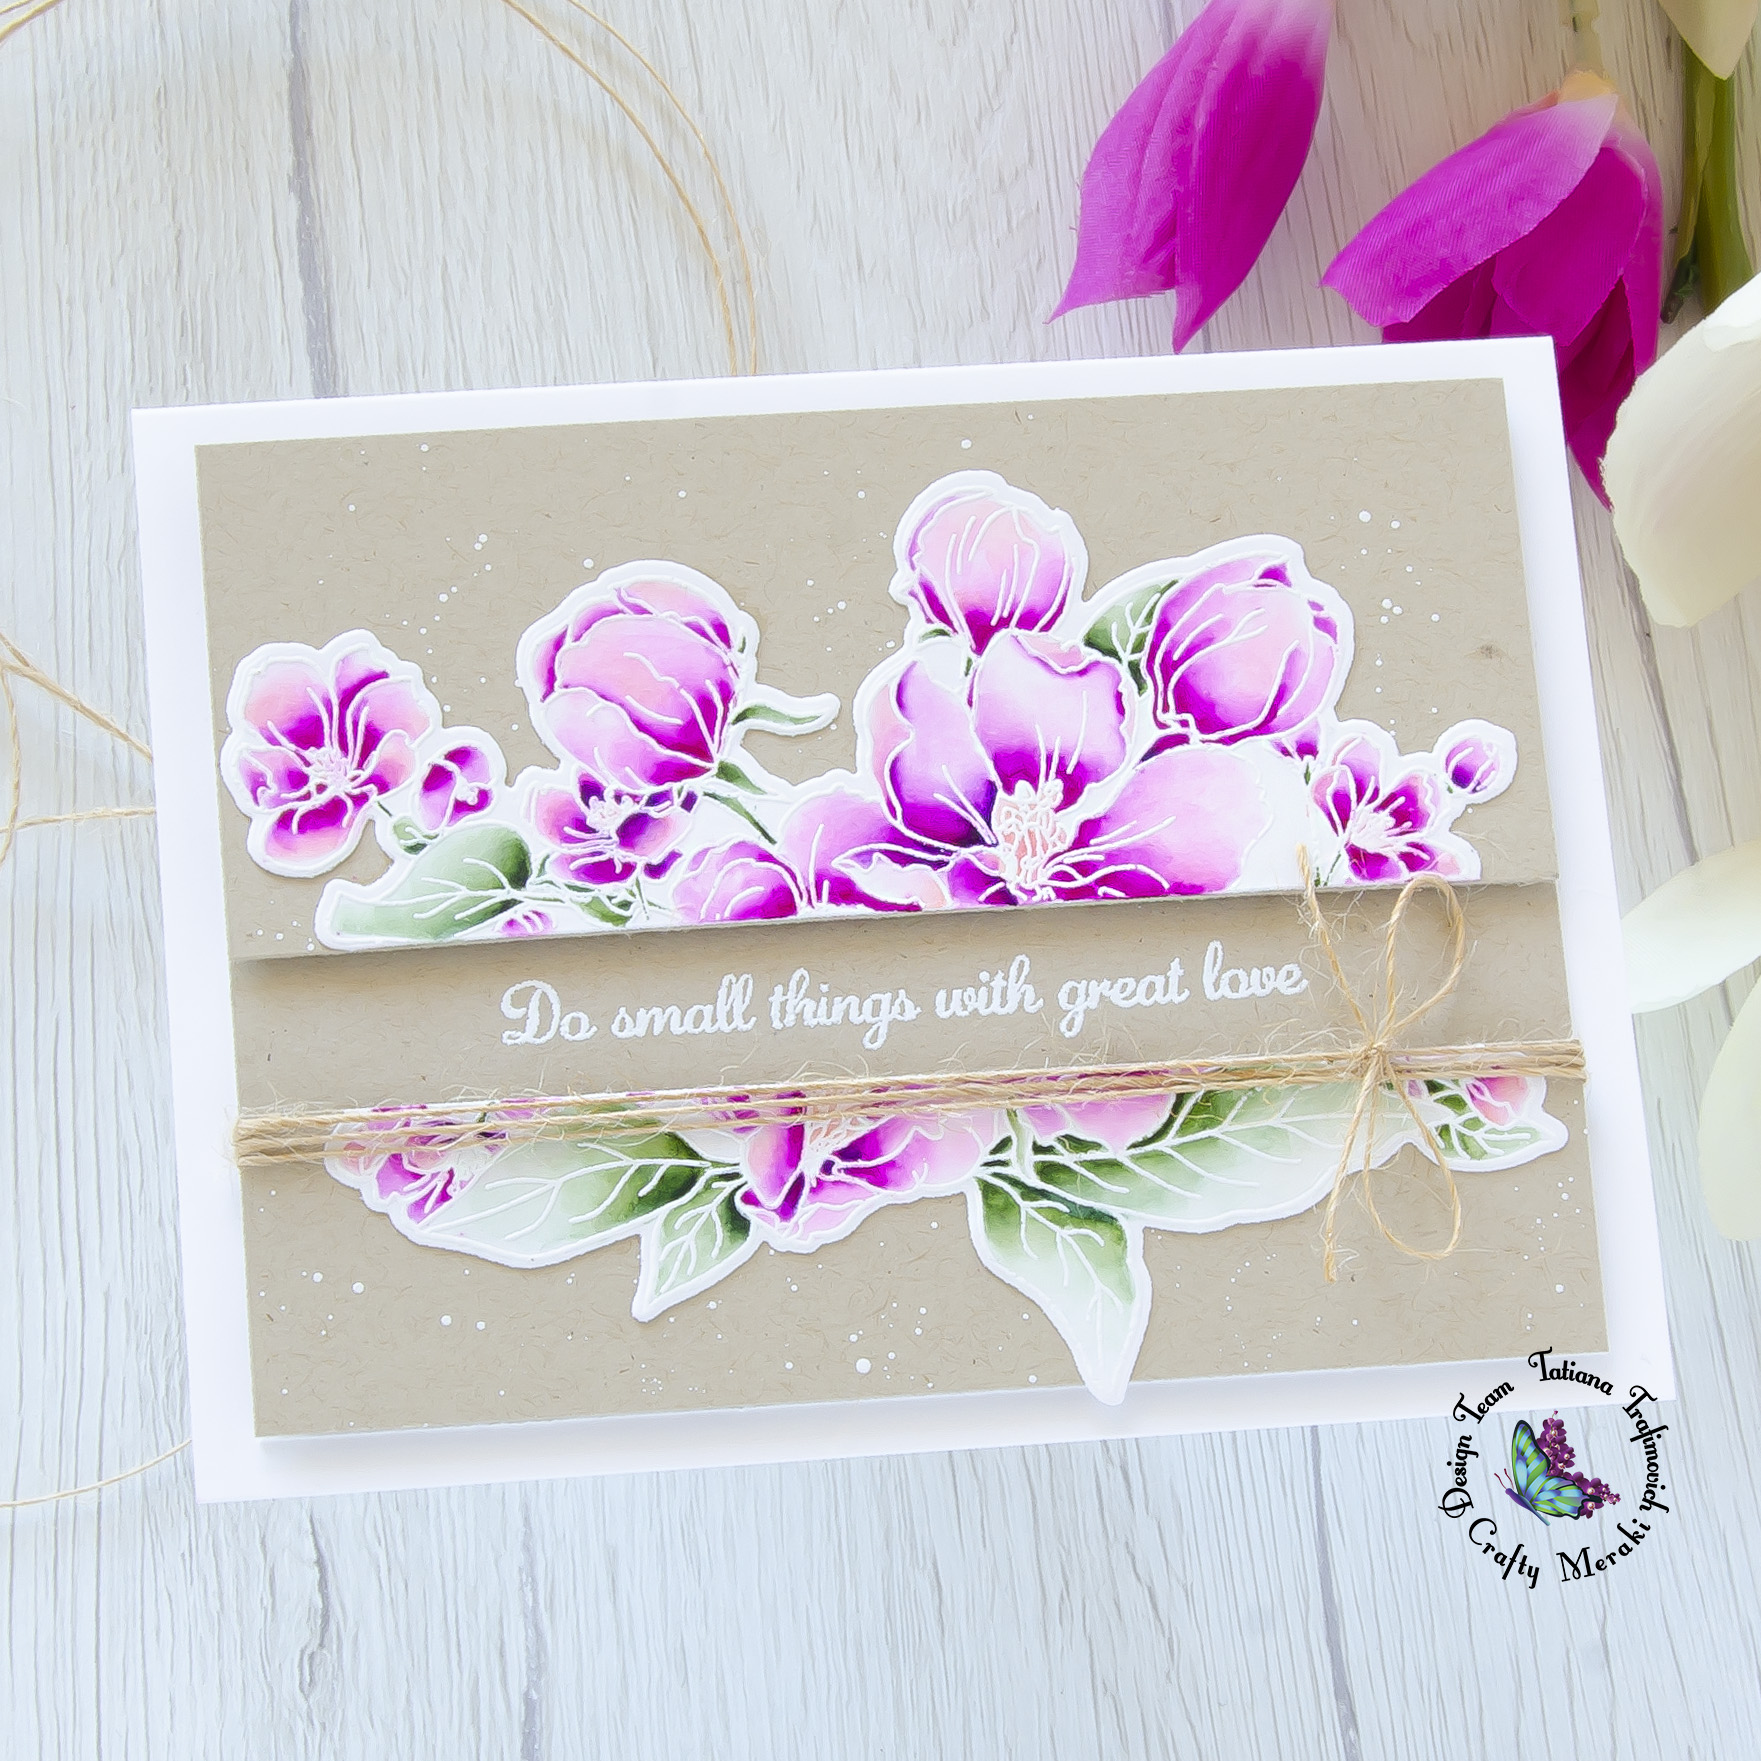 Do Small Things With Great Love #handmade card by Tatiana Trafimovich #tatianacraftandart - You Inspire Me stamp set by Crafty Meraki #craftymeraki